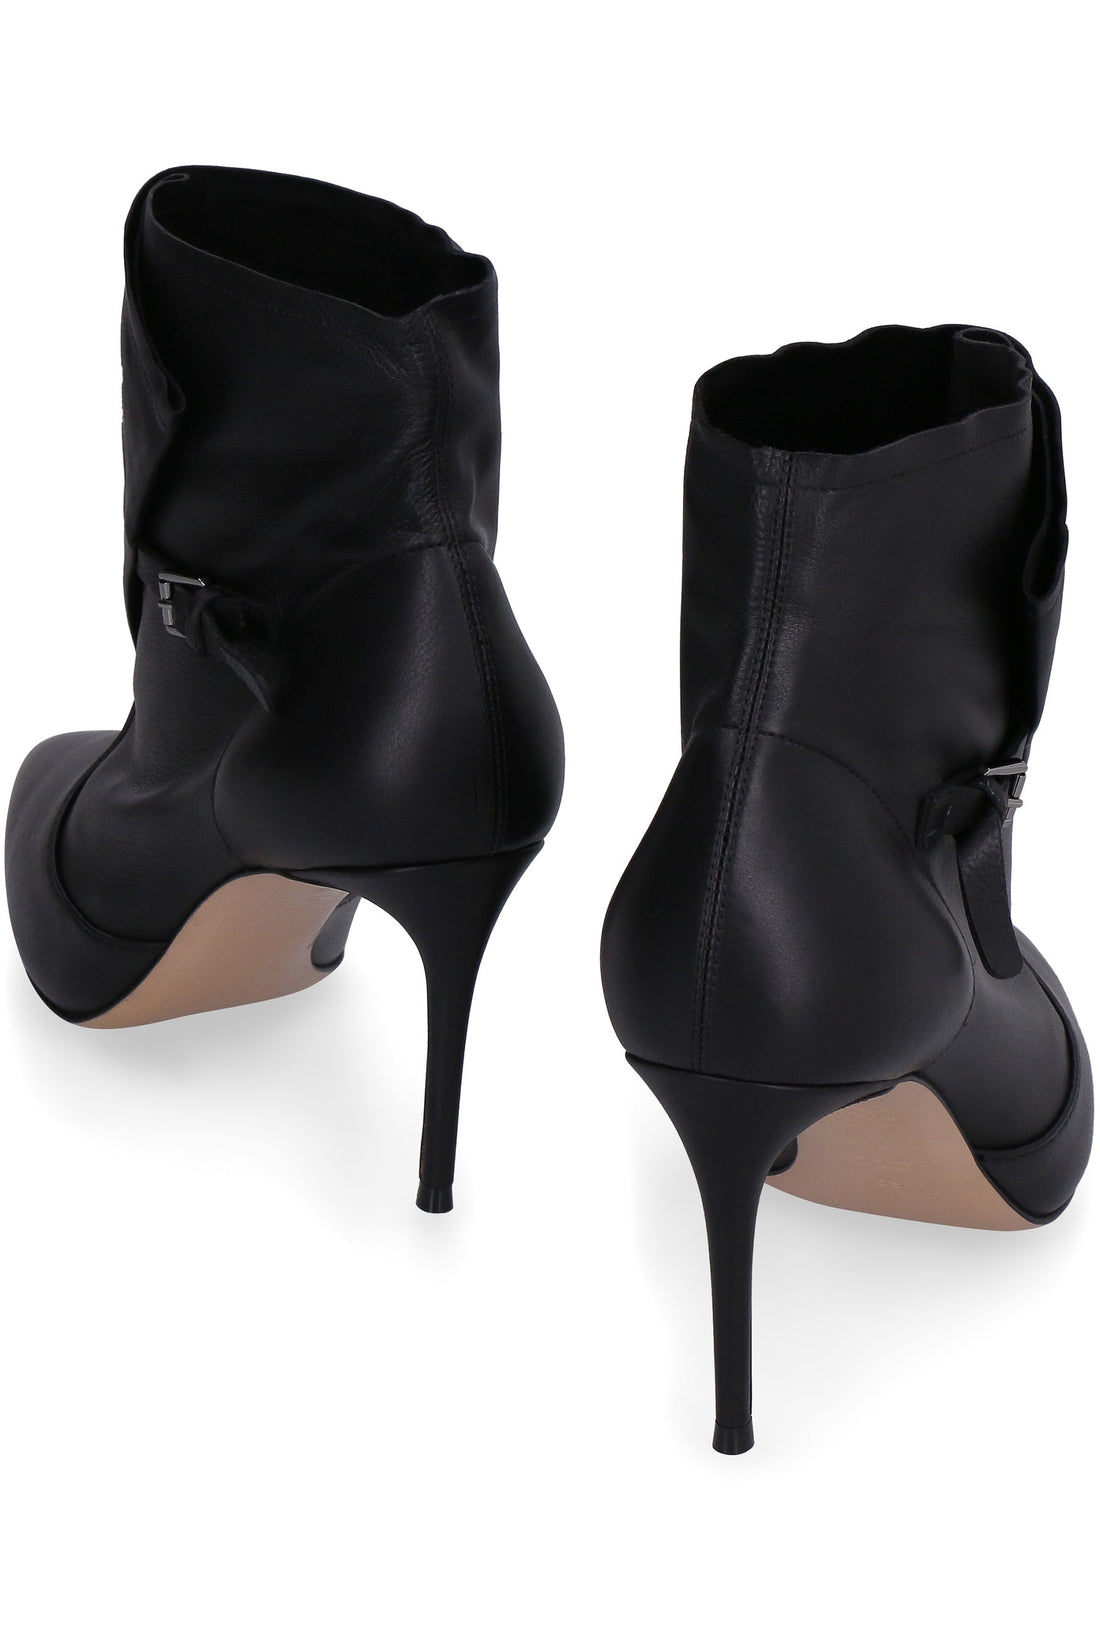 Casadei-OUTLET-SALE-Leather ankle boots-ARCHIVIST